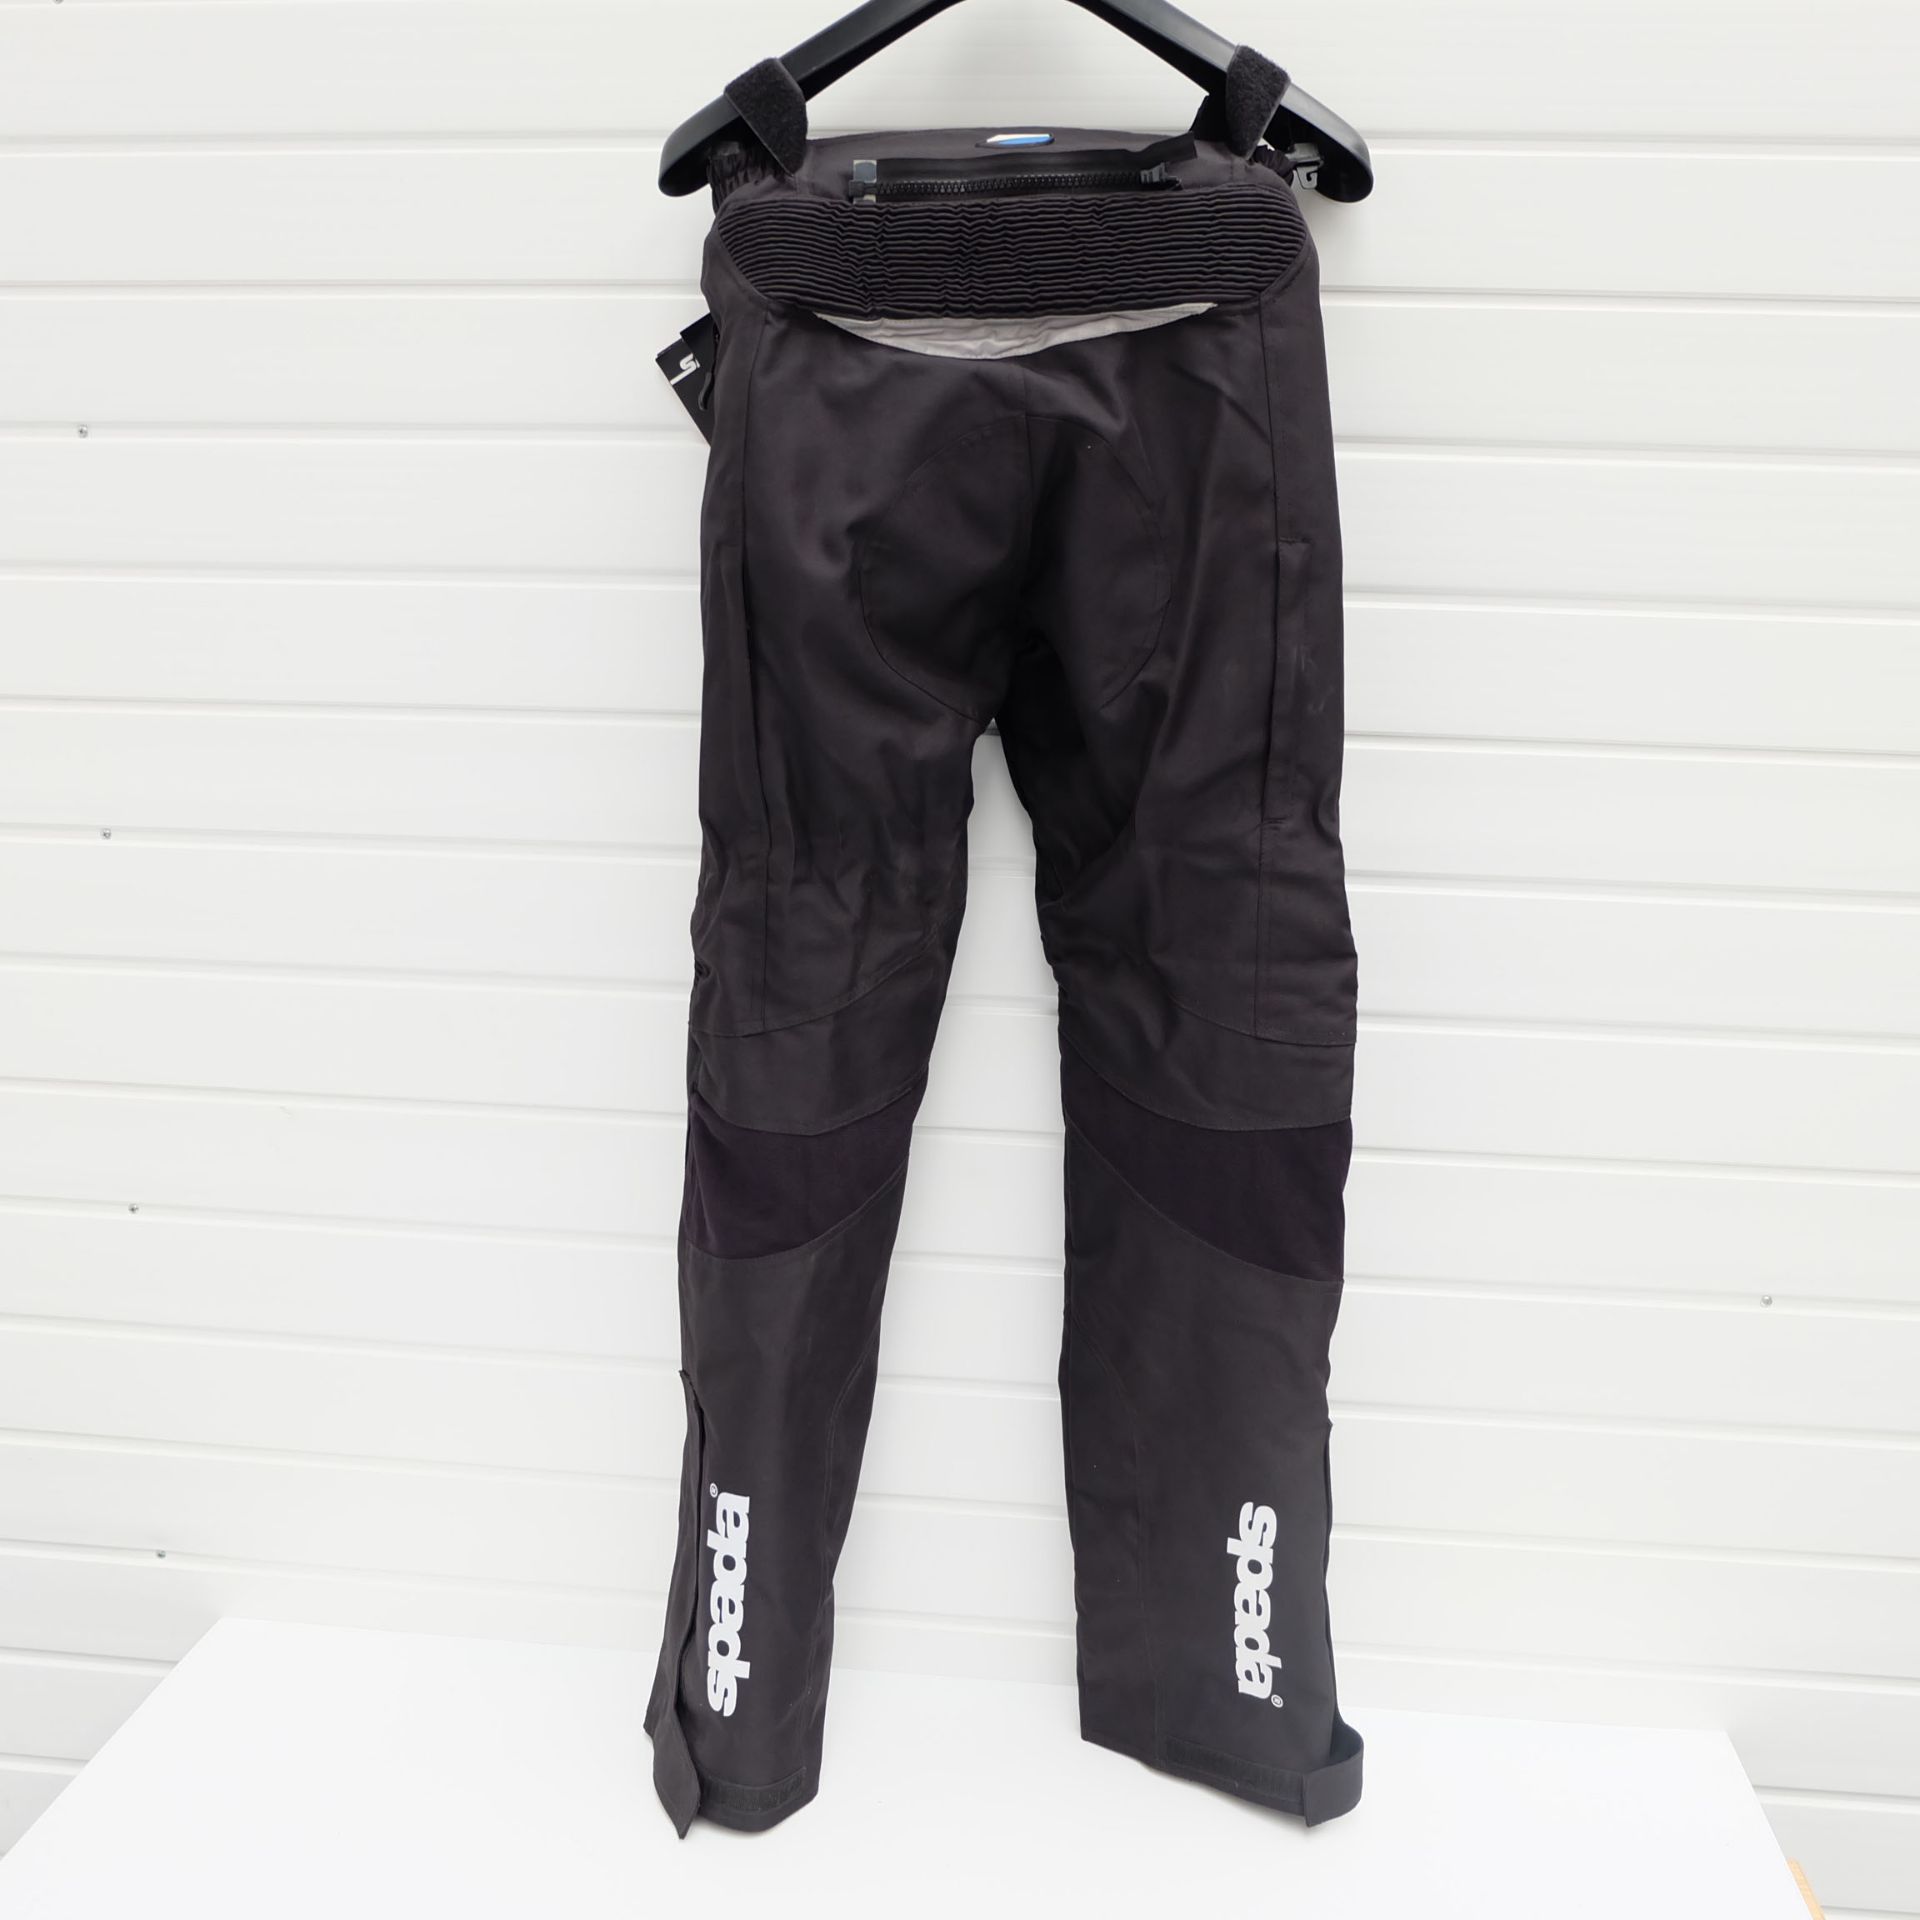 Spada Turini Motorcycle Trousers (Mens) Black. Medium - Bild 4 aus 10